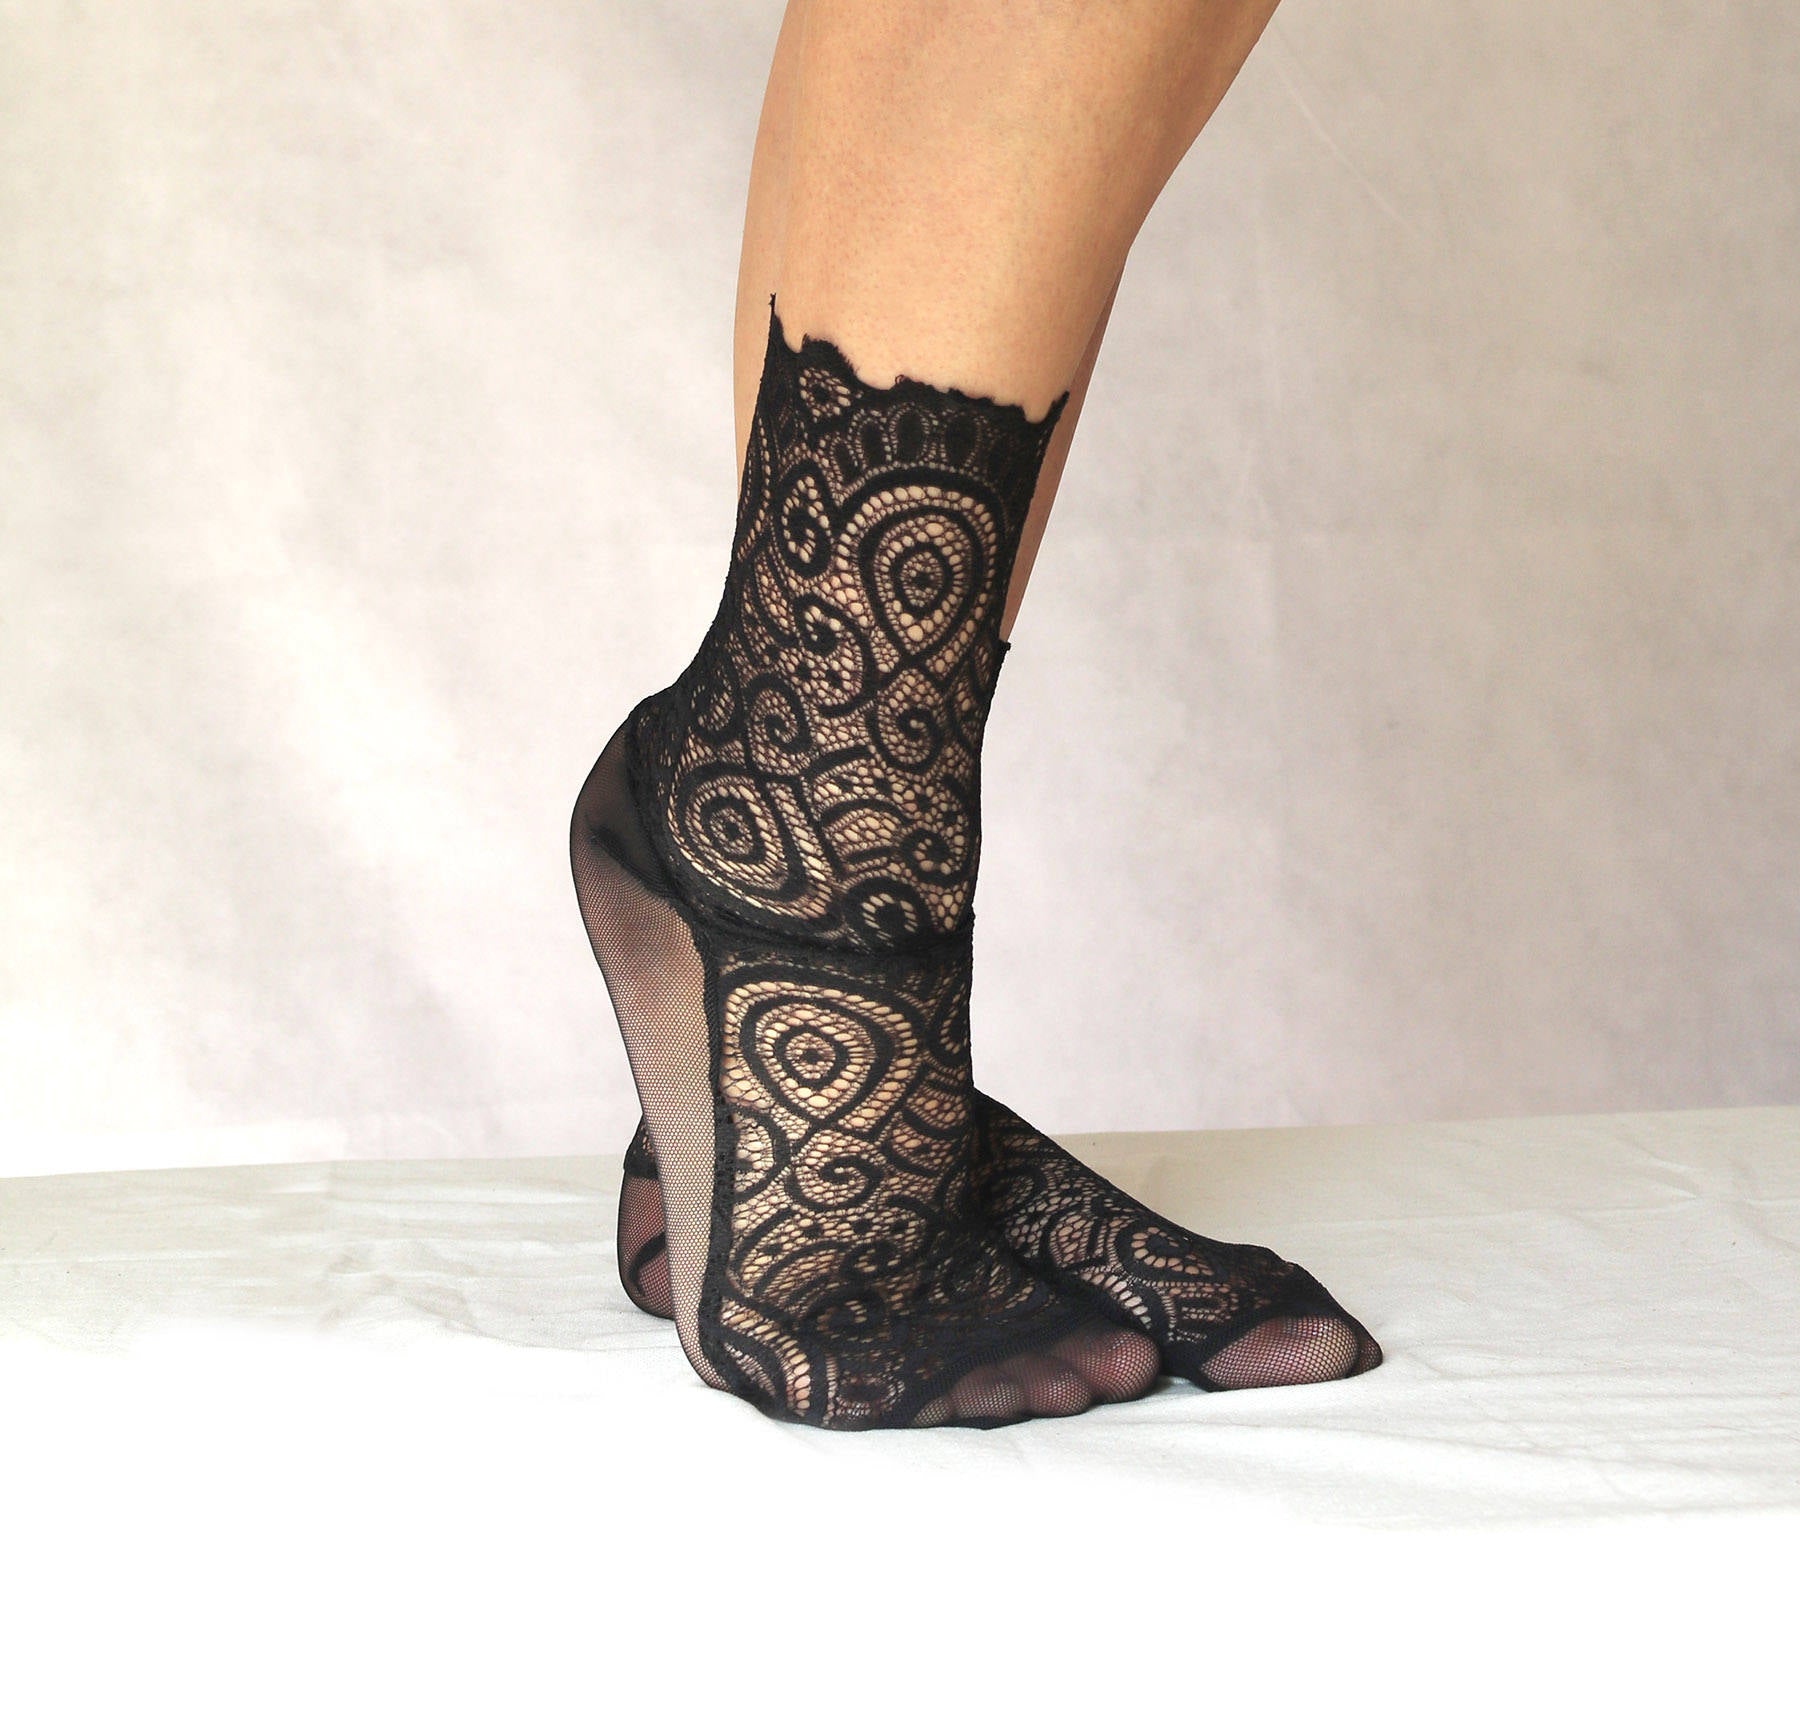 Black Lace and Mesh socks. Handmade Women’s Socks